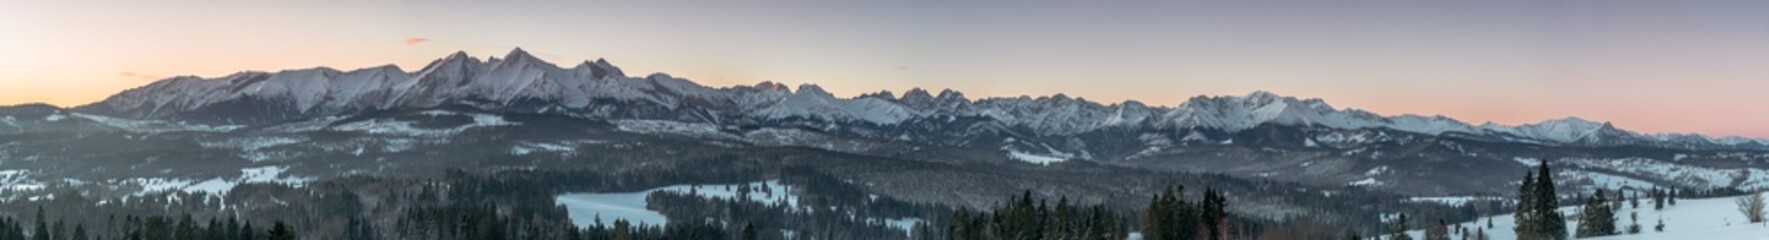 Tatra Mountain panorama in winter scenery from Lapszanka Pass.